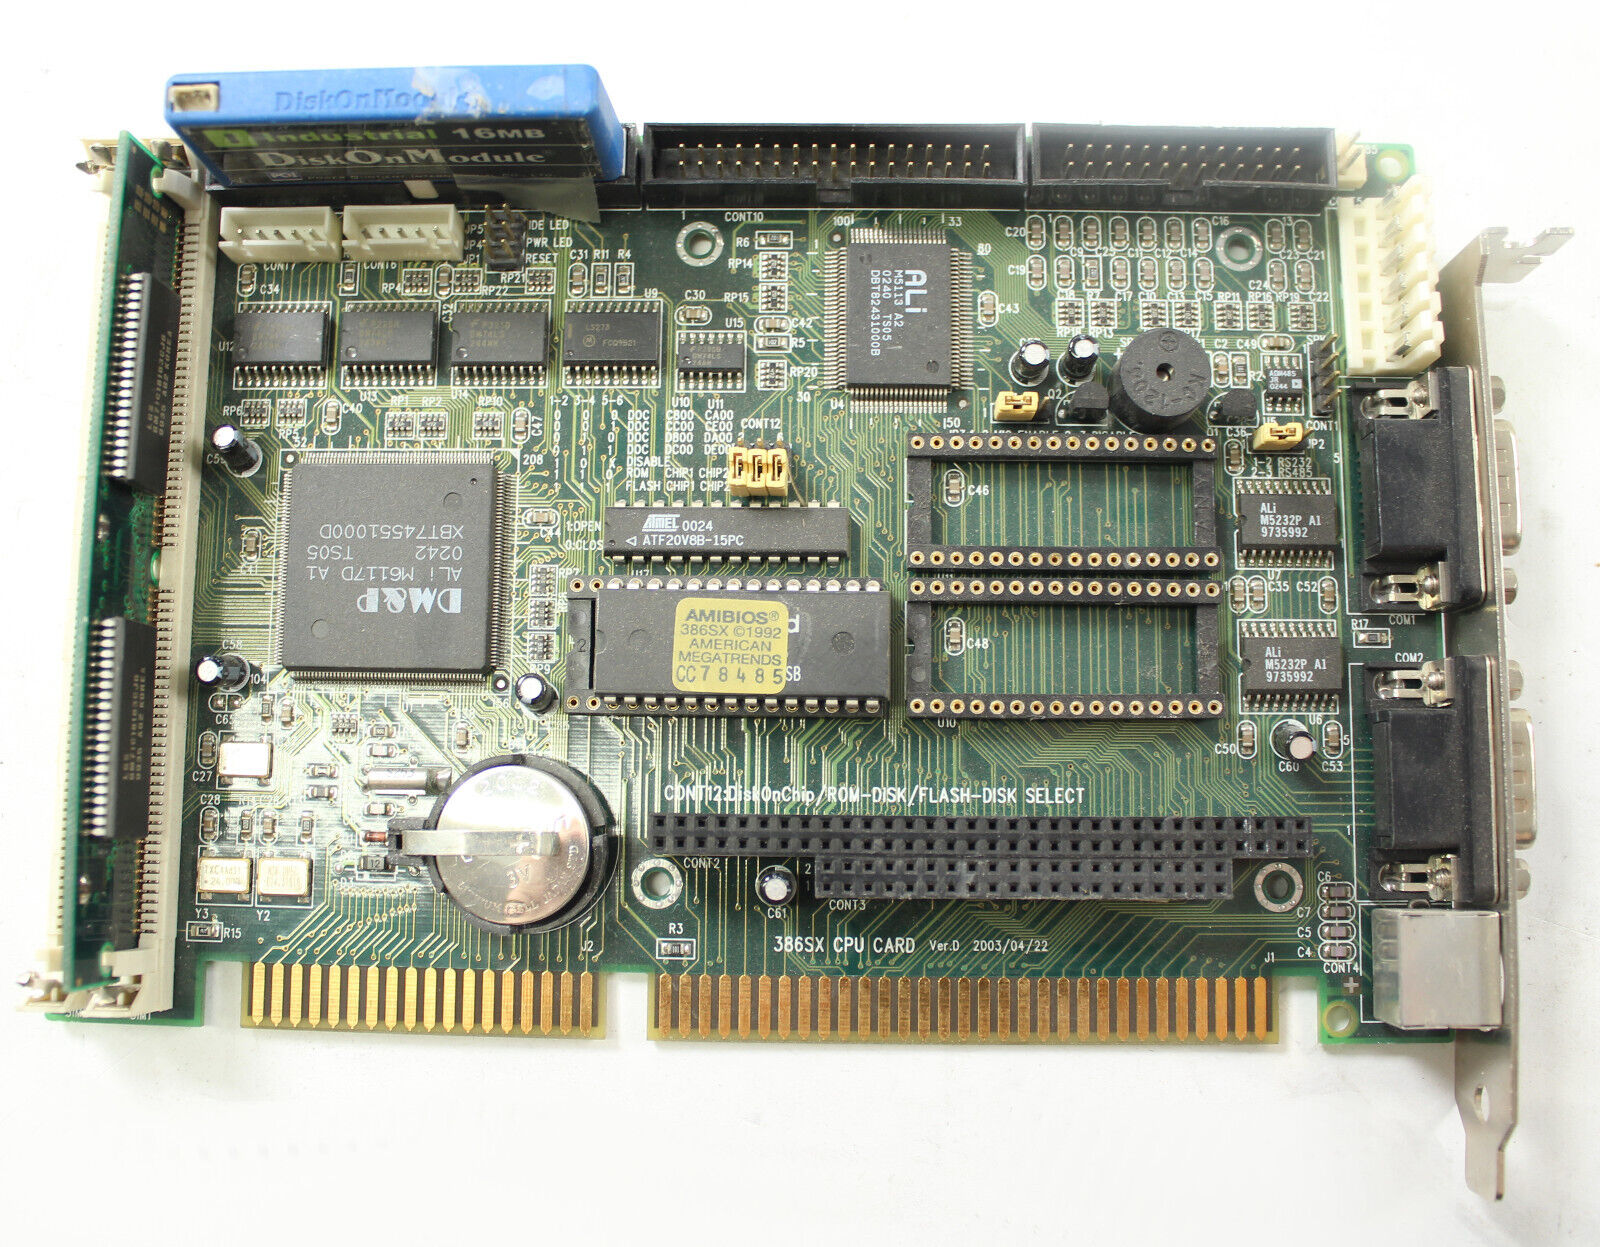 Advantech Industrial computer mainboard 386SX CPU Card w/ DOM Flash Disk Module